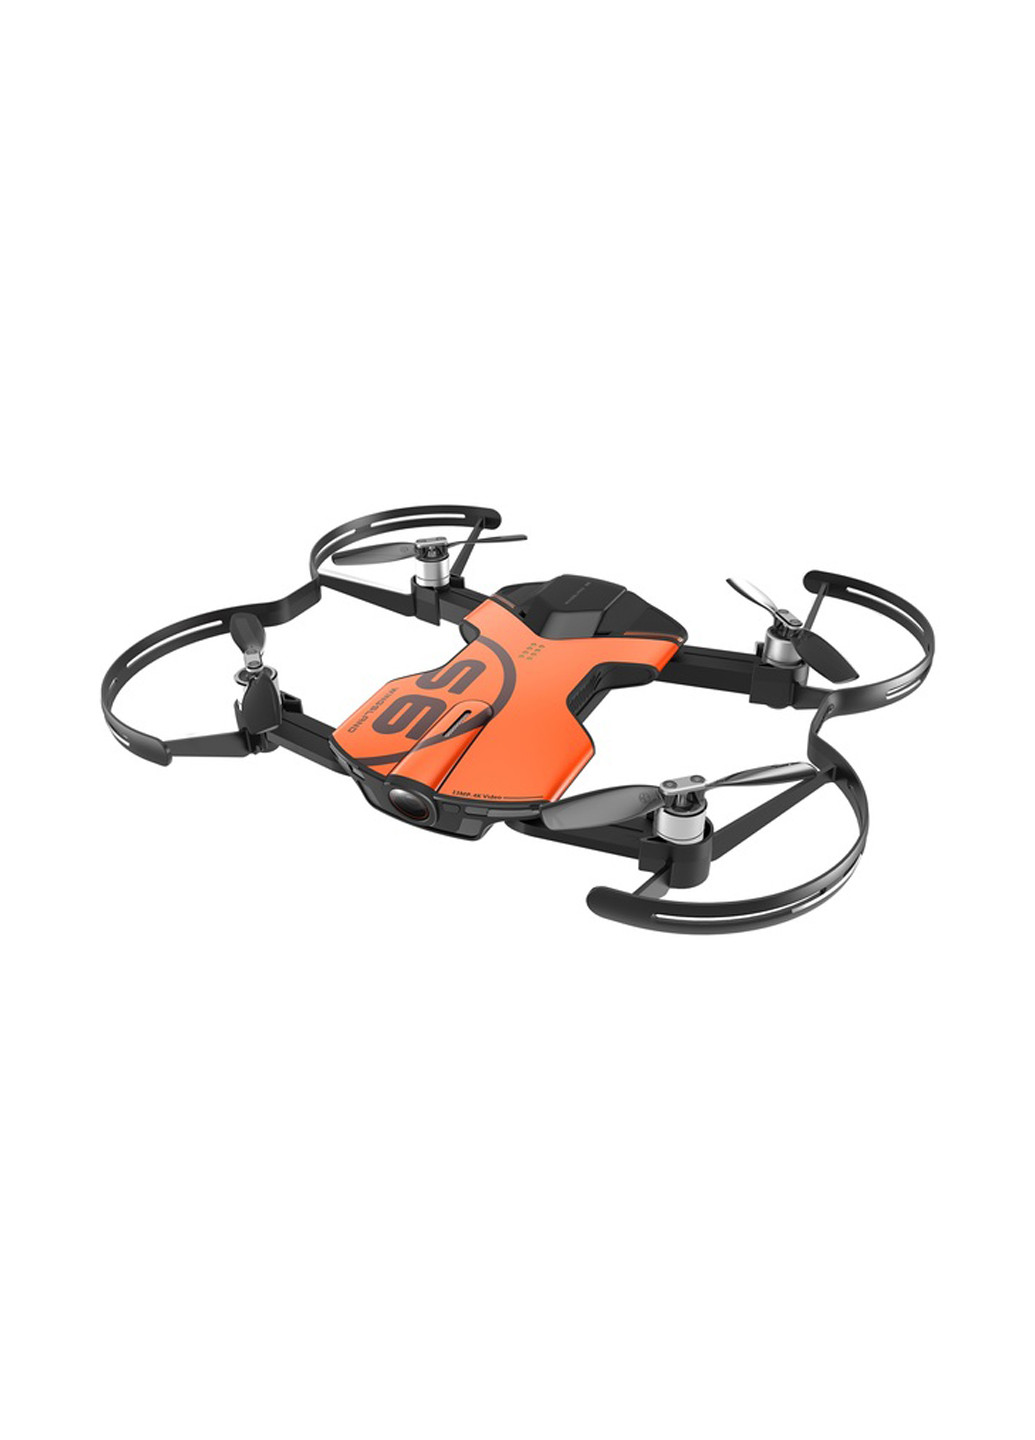 Дрон Wingsland s6 gps 4k pocket drone-2 batteries pack (orange) (136066183)